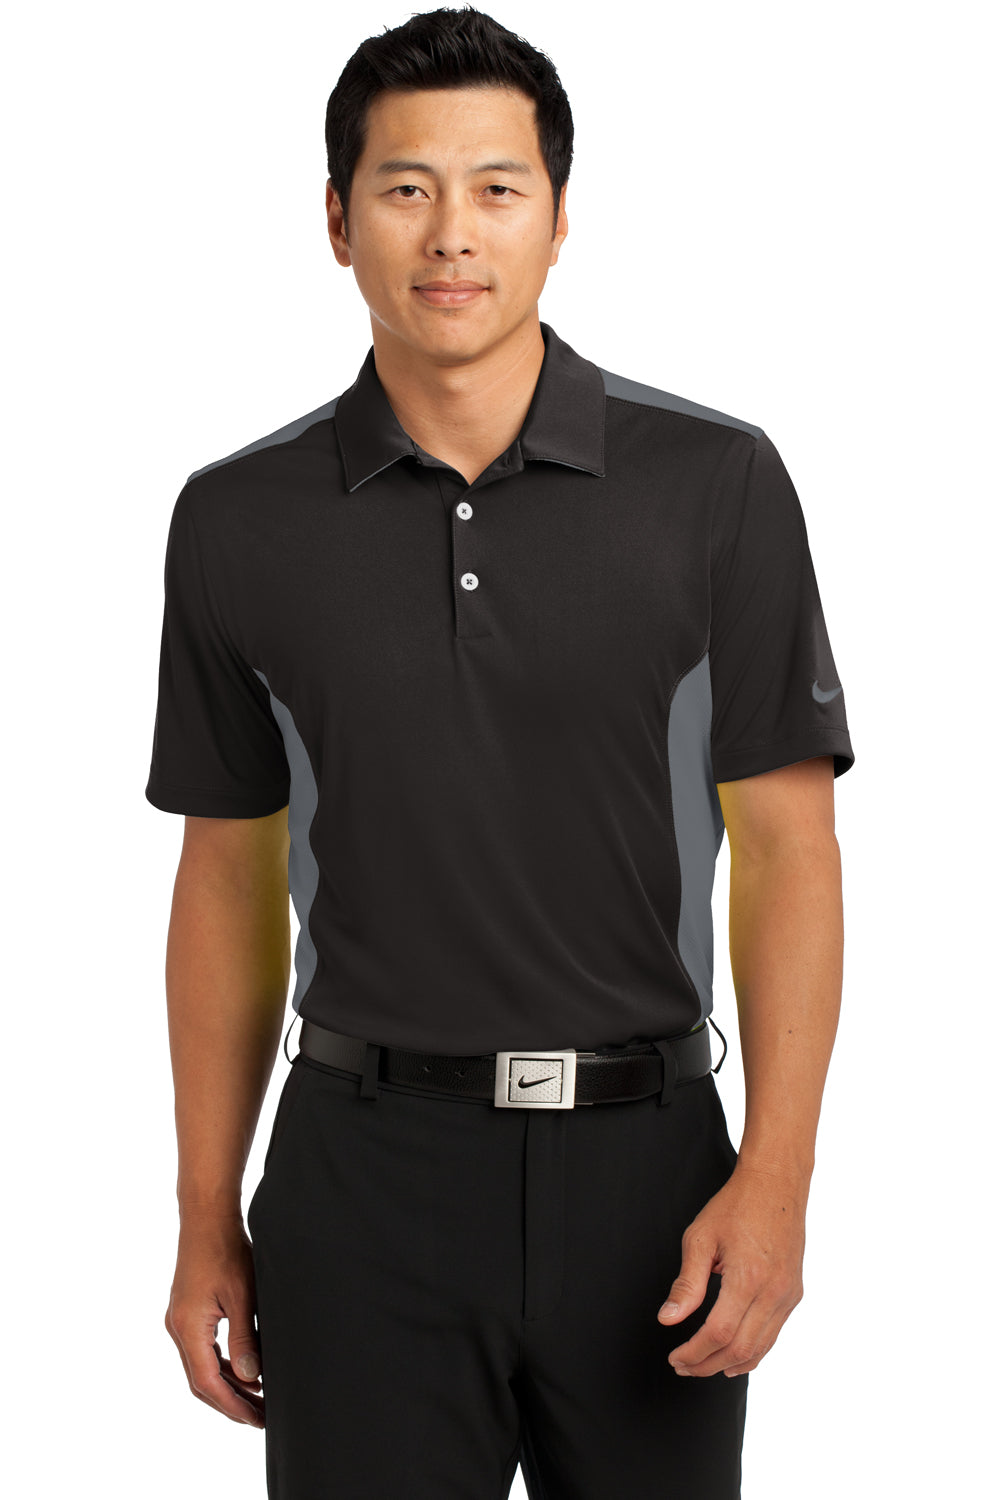 Nike 632418 Mens Dri-Fit Moisture Wicking Short Sleeve Polo Shirt Black/Dark Grey Front